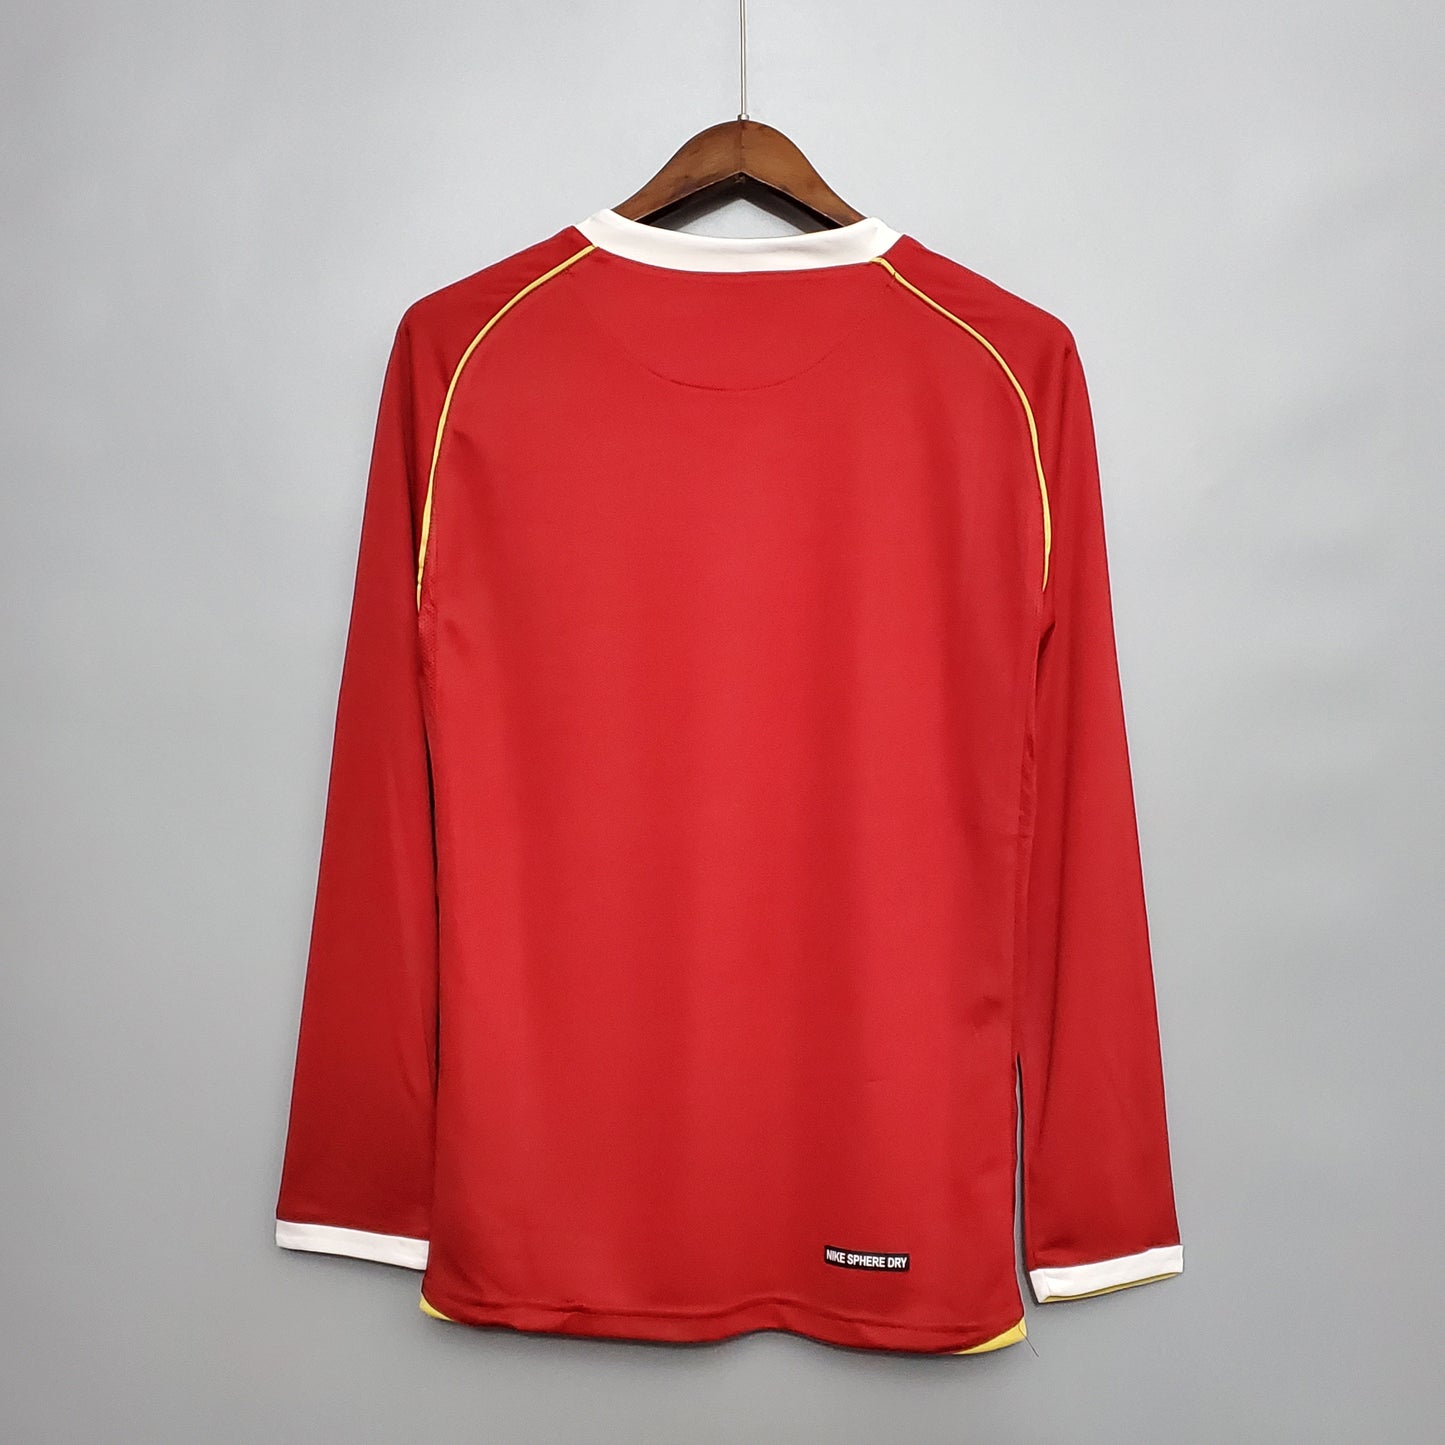 Manchester United Home Kit Retro Long Sleeves 06/07